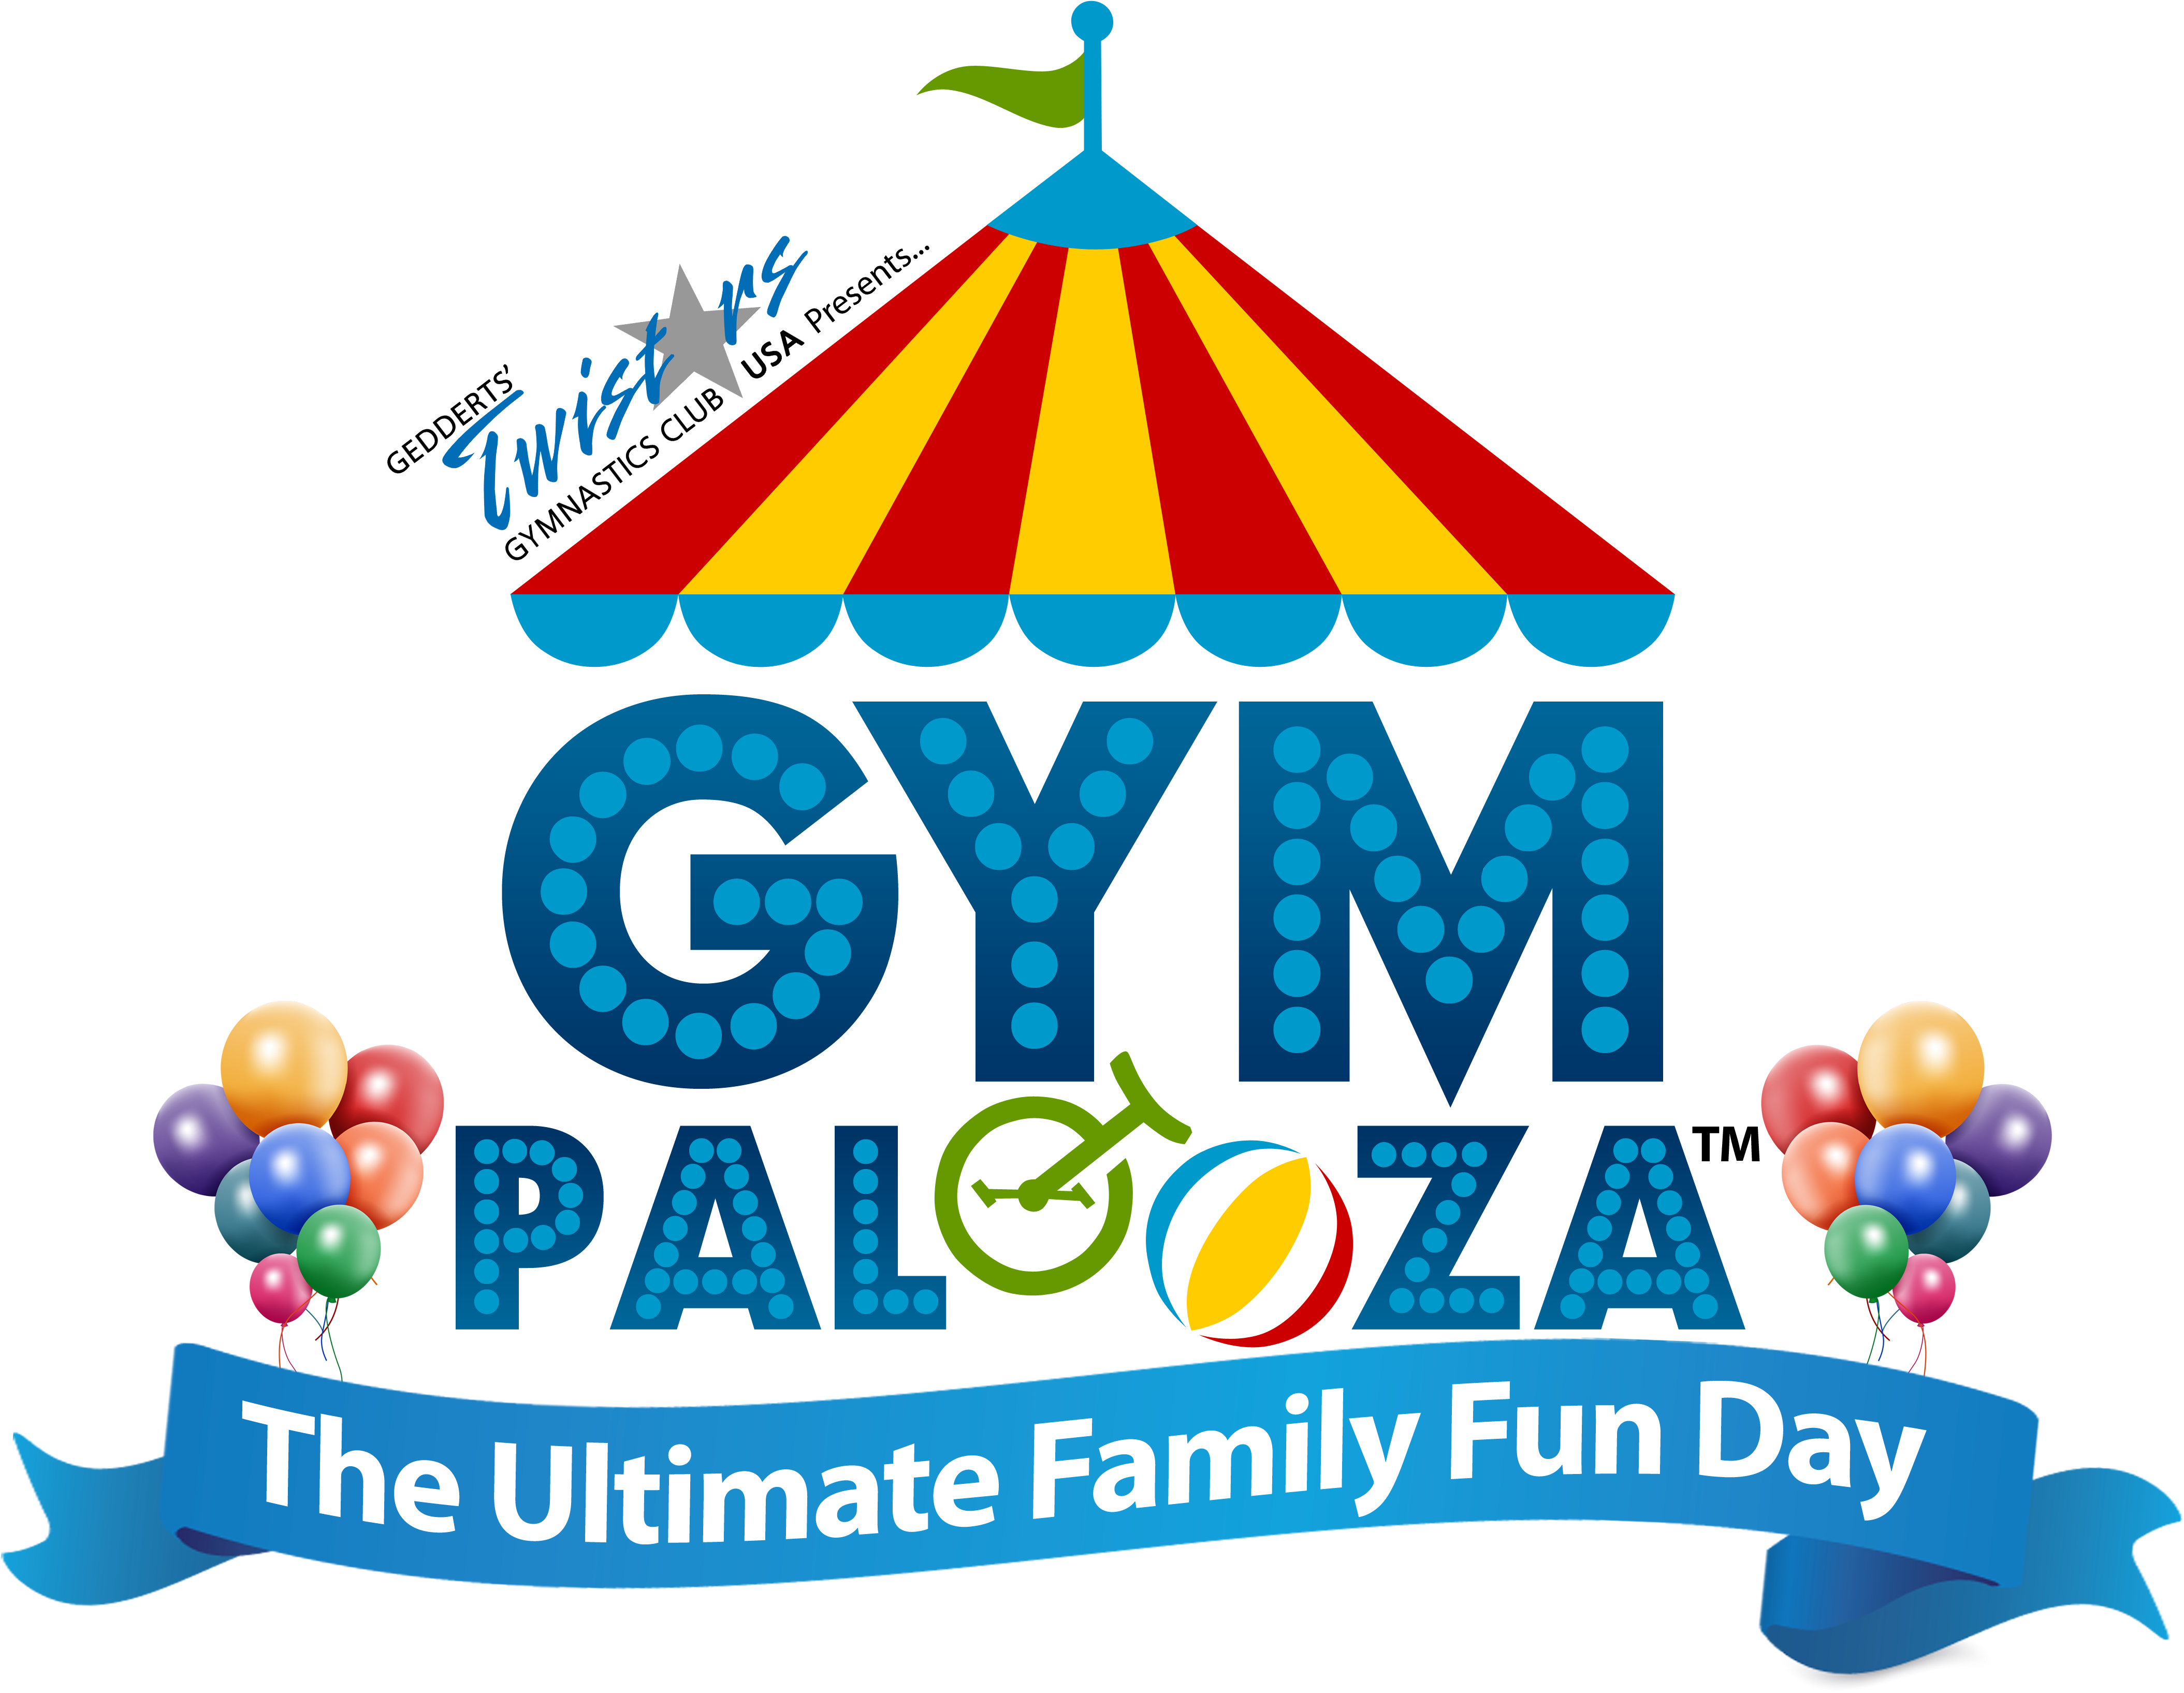 Gympalooza™ The Ultimate Family Fun Day - Becky (4217x3327)